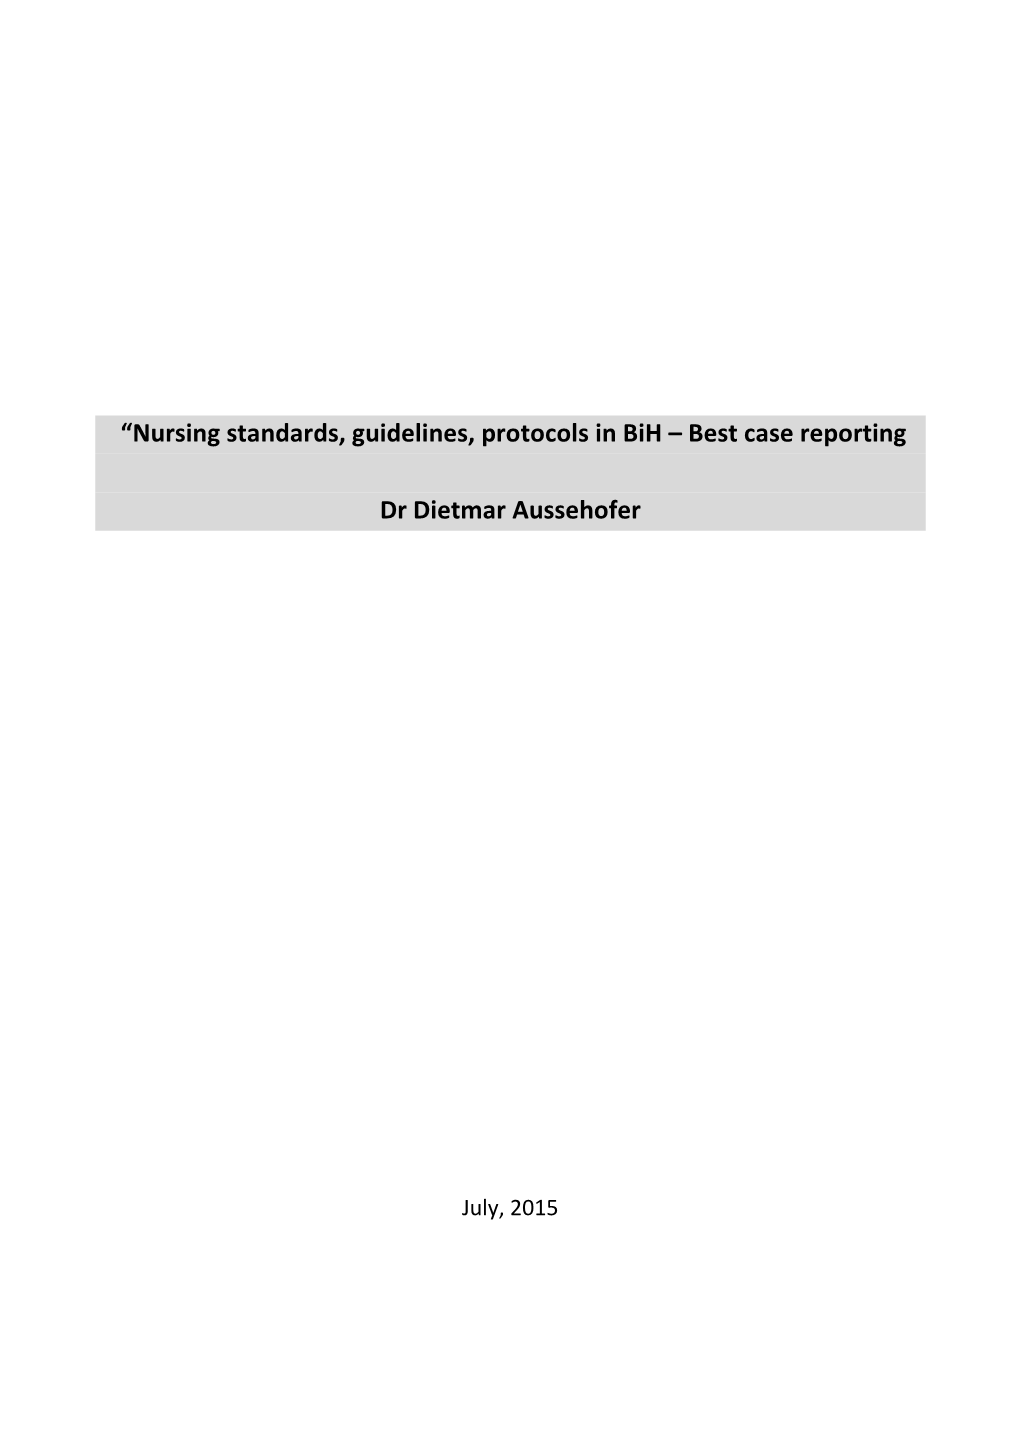 “Nursing Standards, Guidelines, Protocols in Bih – Best Case Reporting